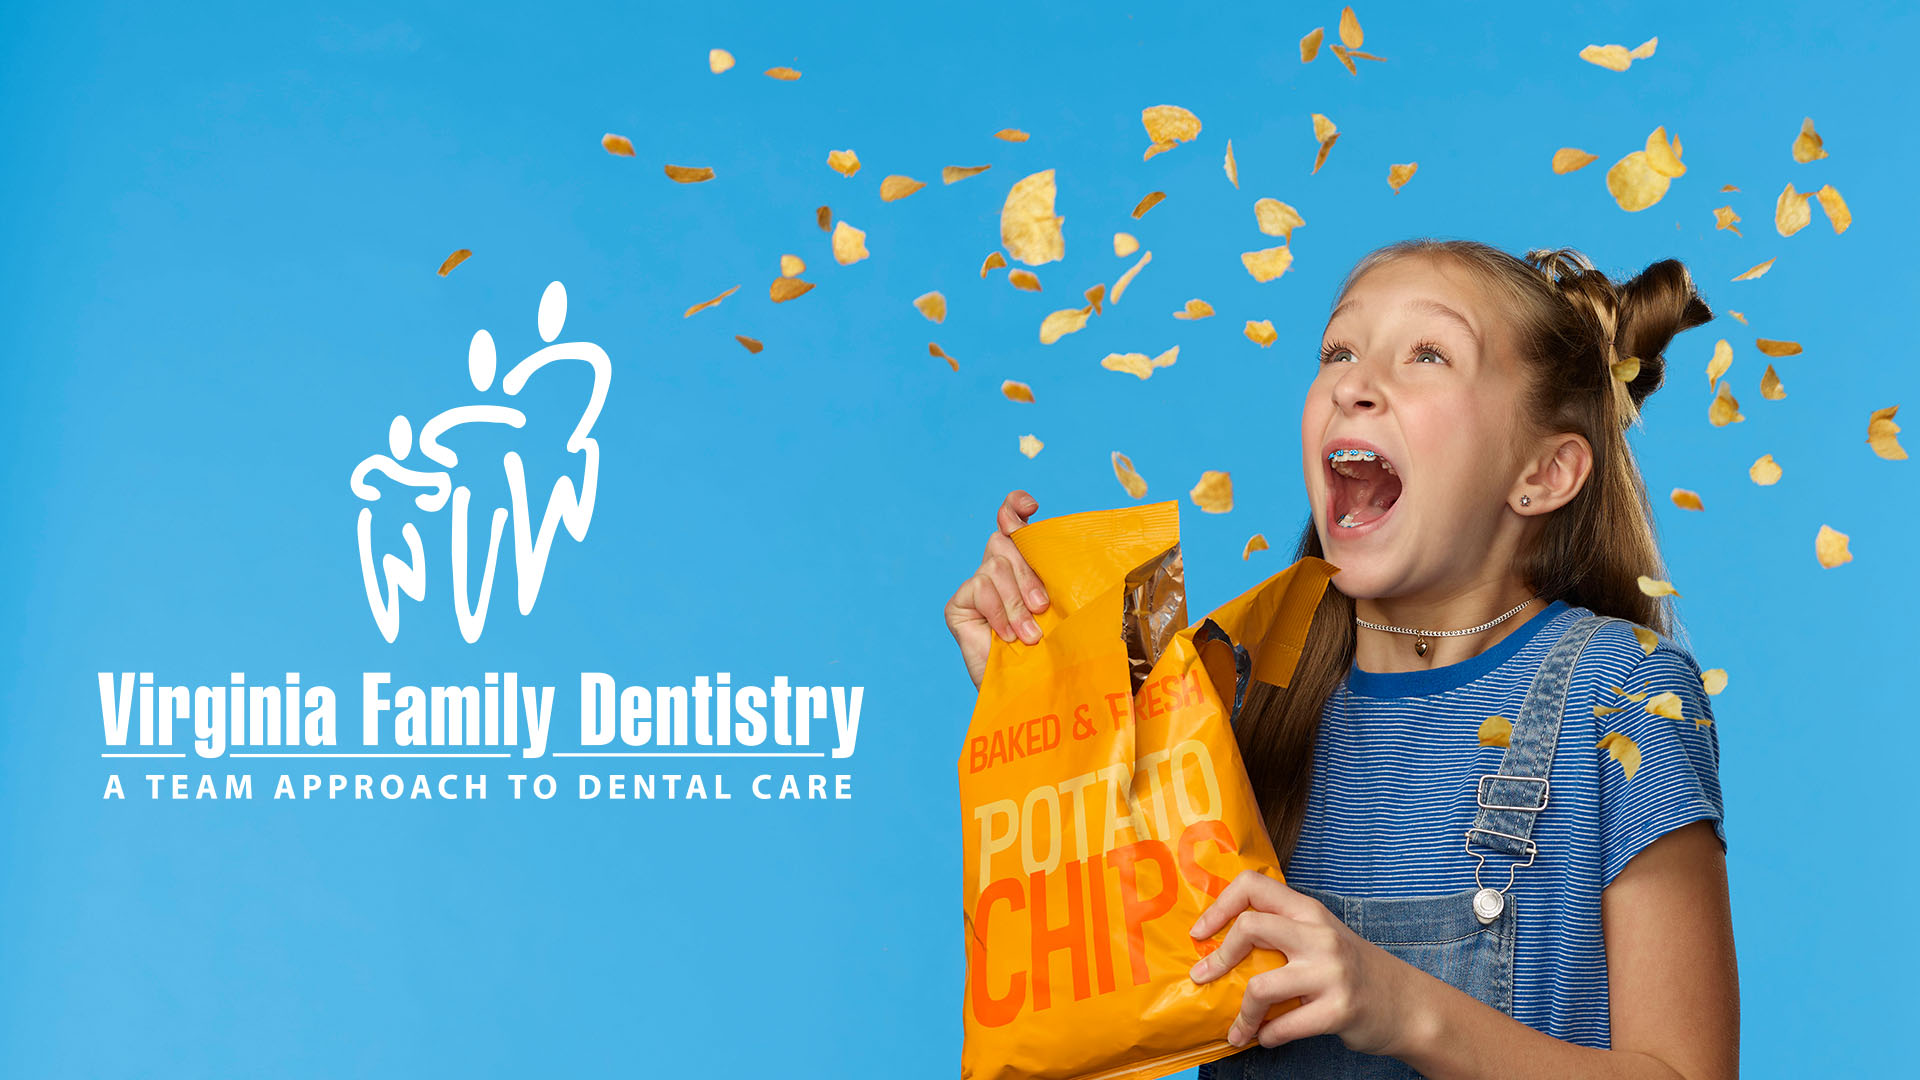 Virginia Family Dentistry Logo and Ad